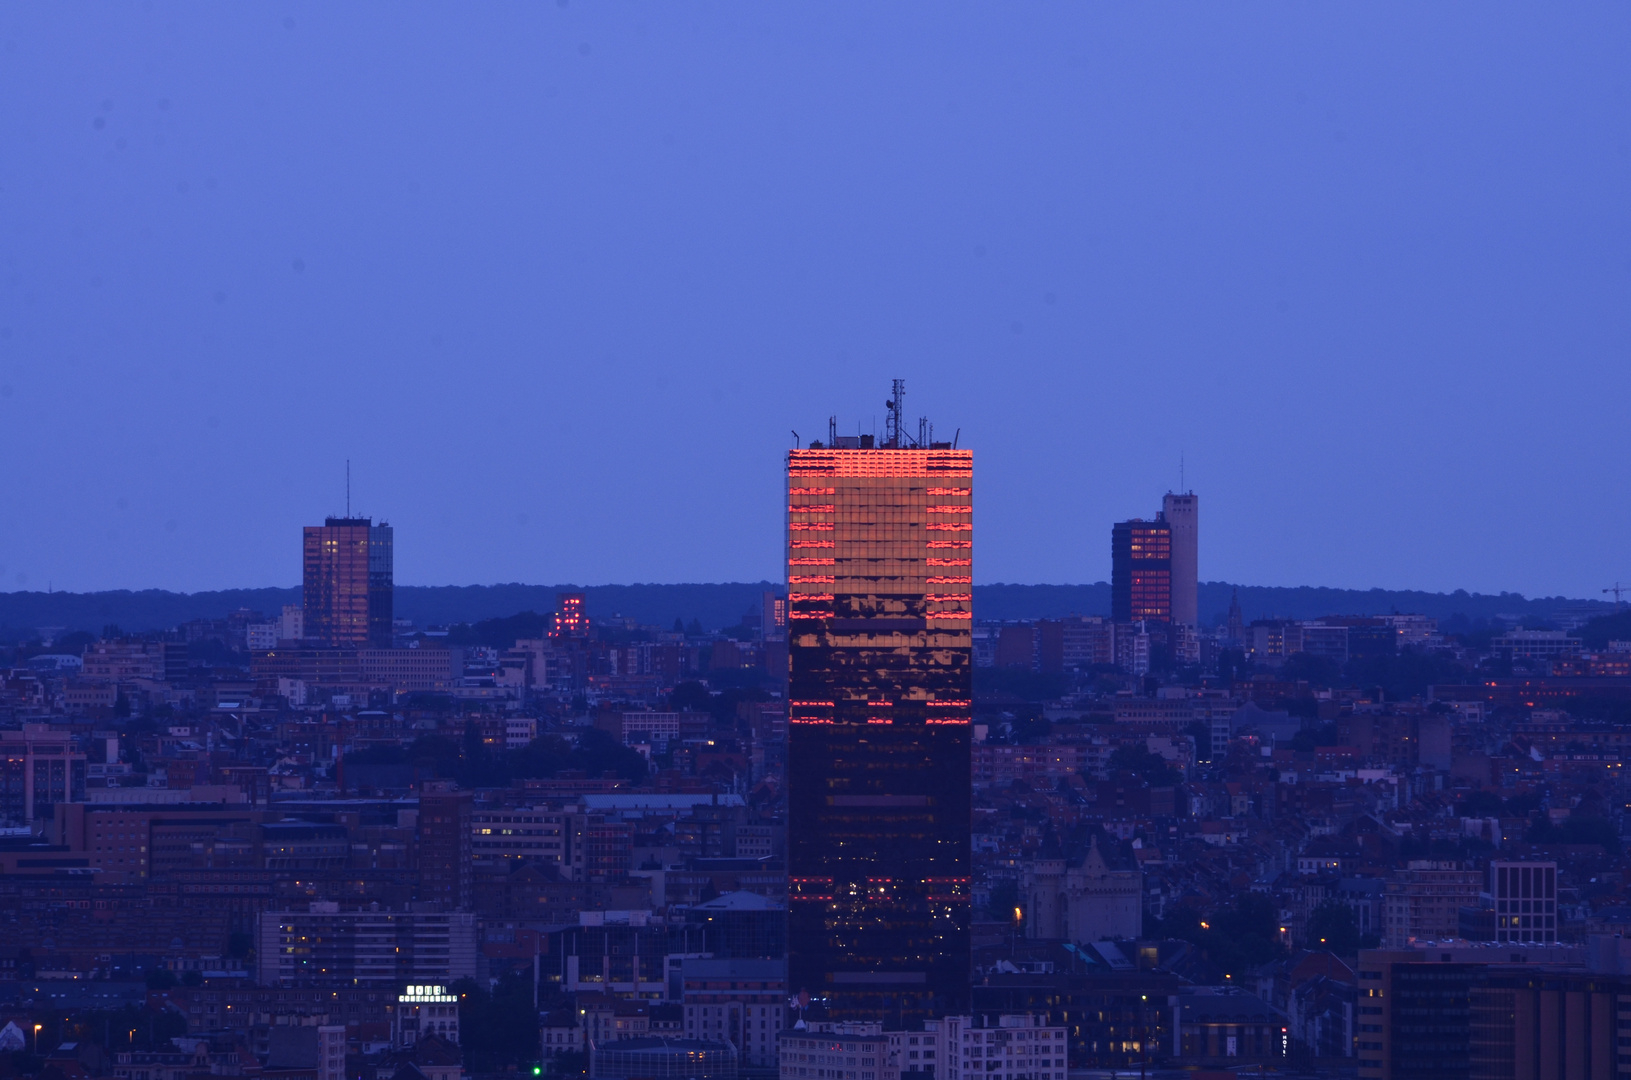 Brussels - Midi Tower